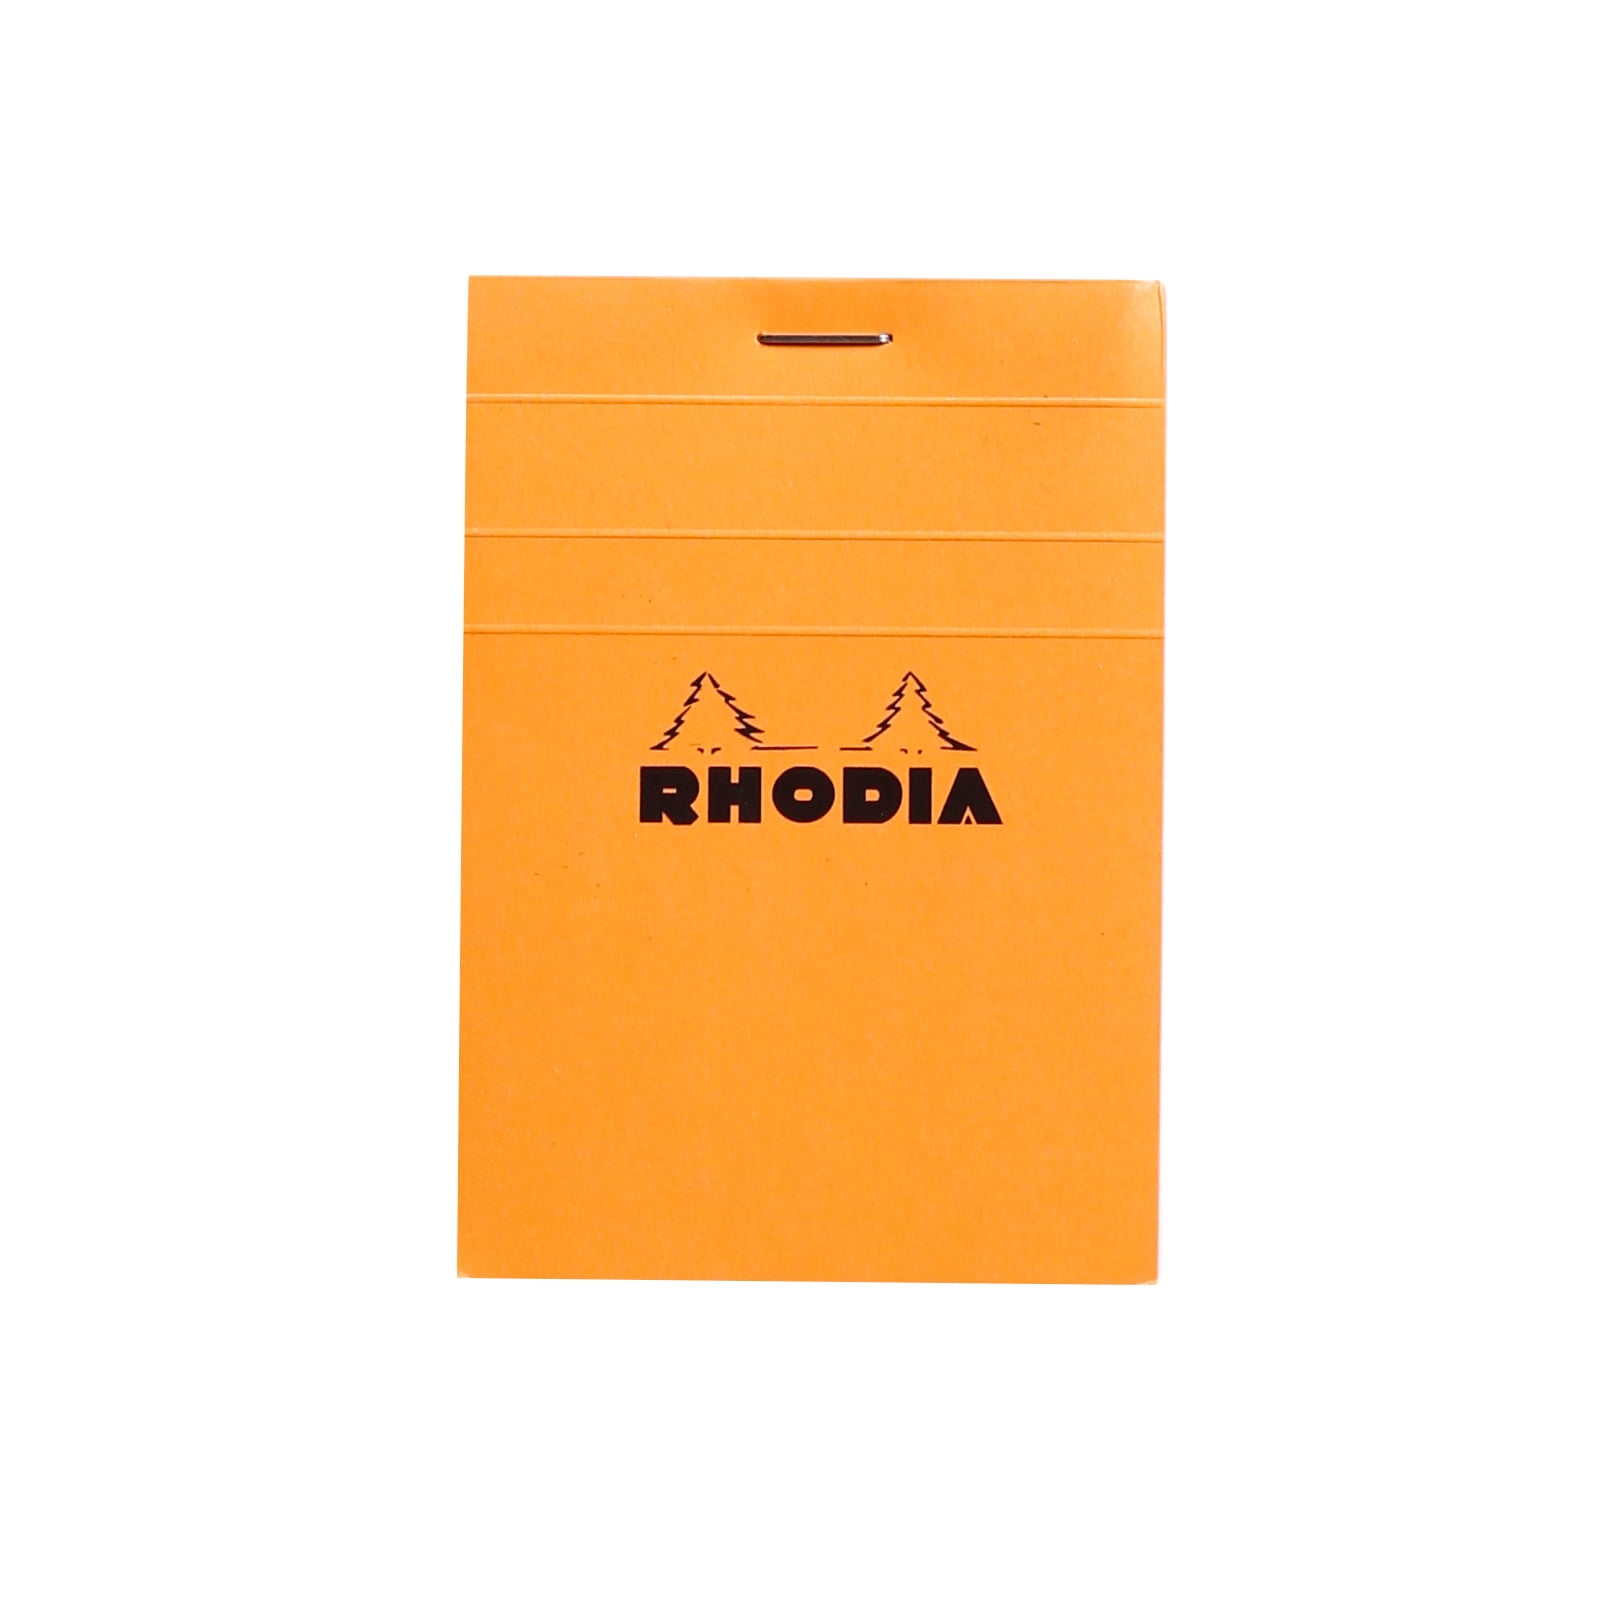 Rhodia Side Staplebound Orange and Black Large Notebook 6 X 8 Pack of 2 